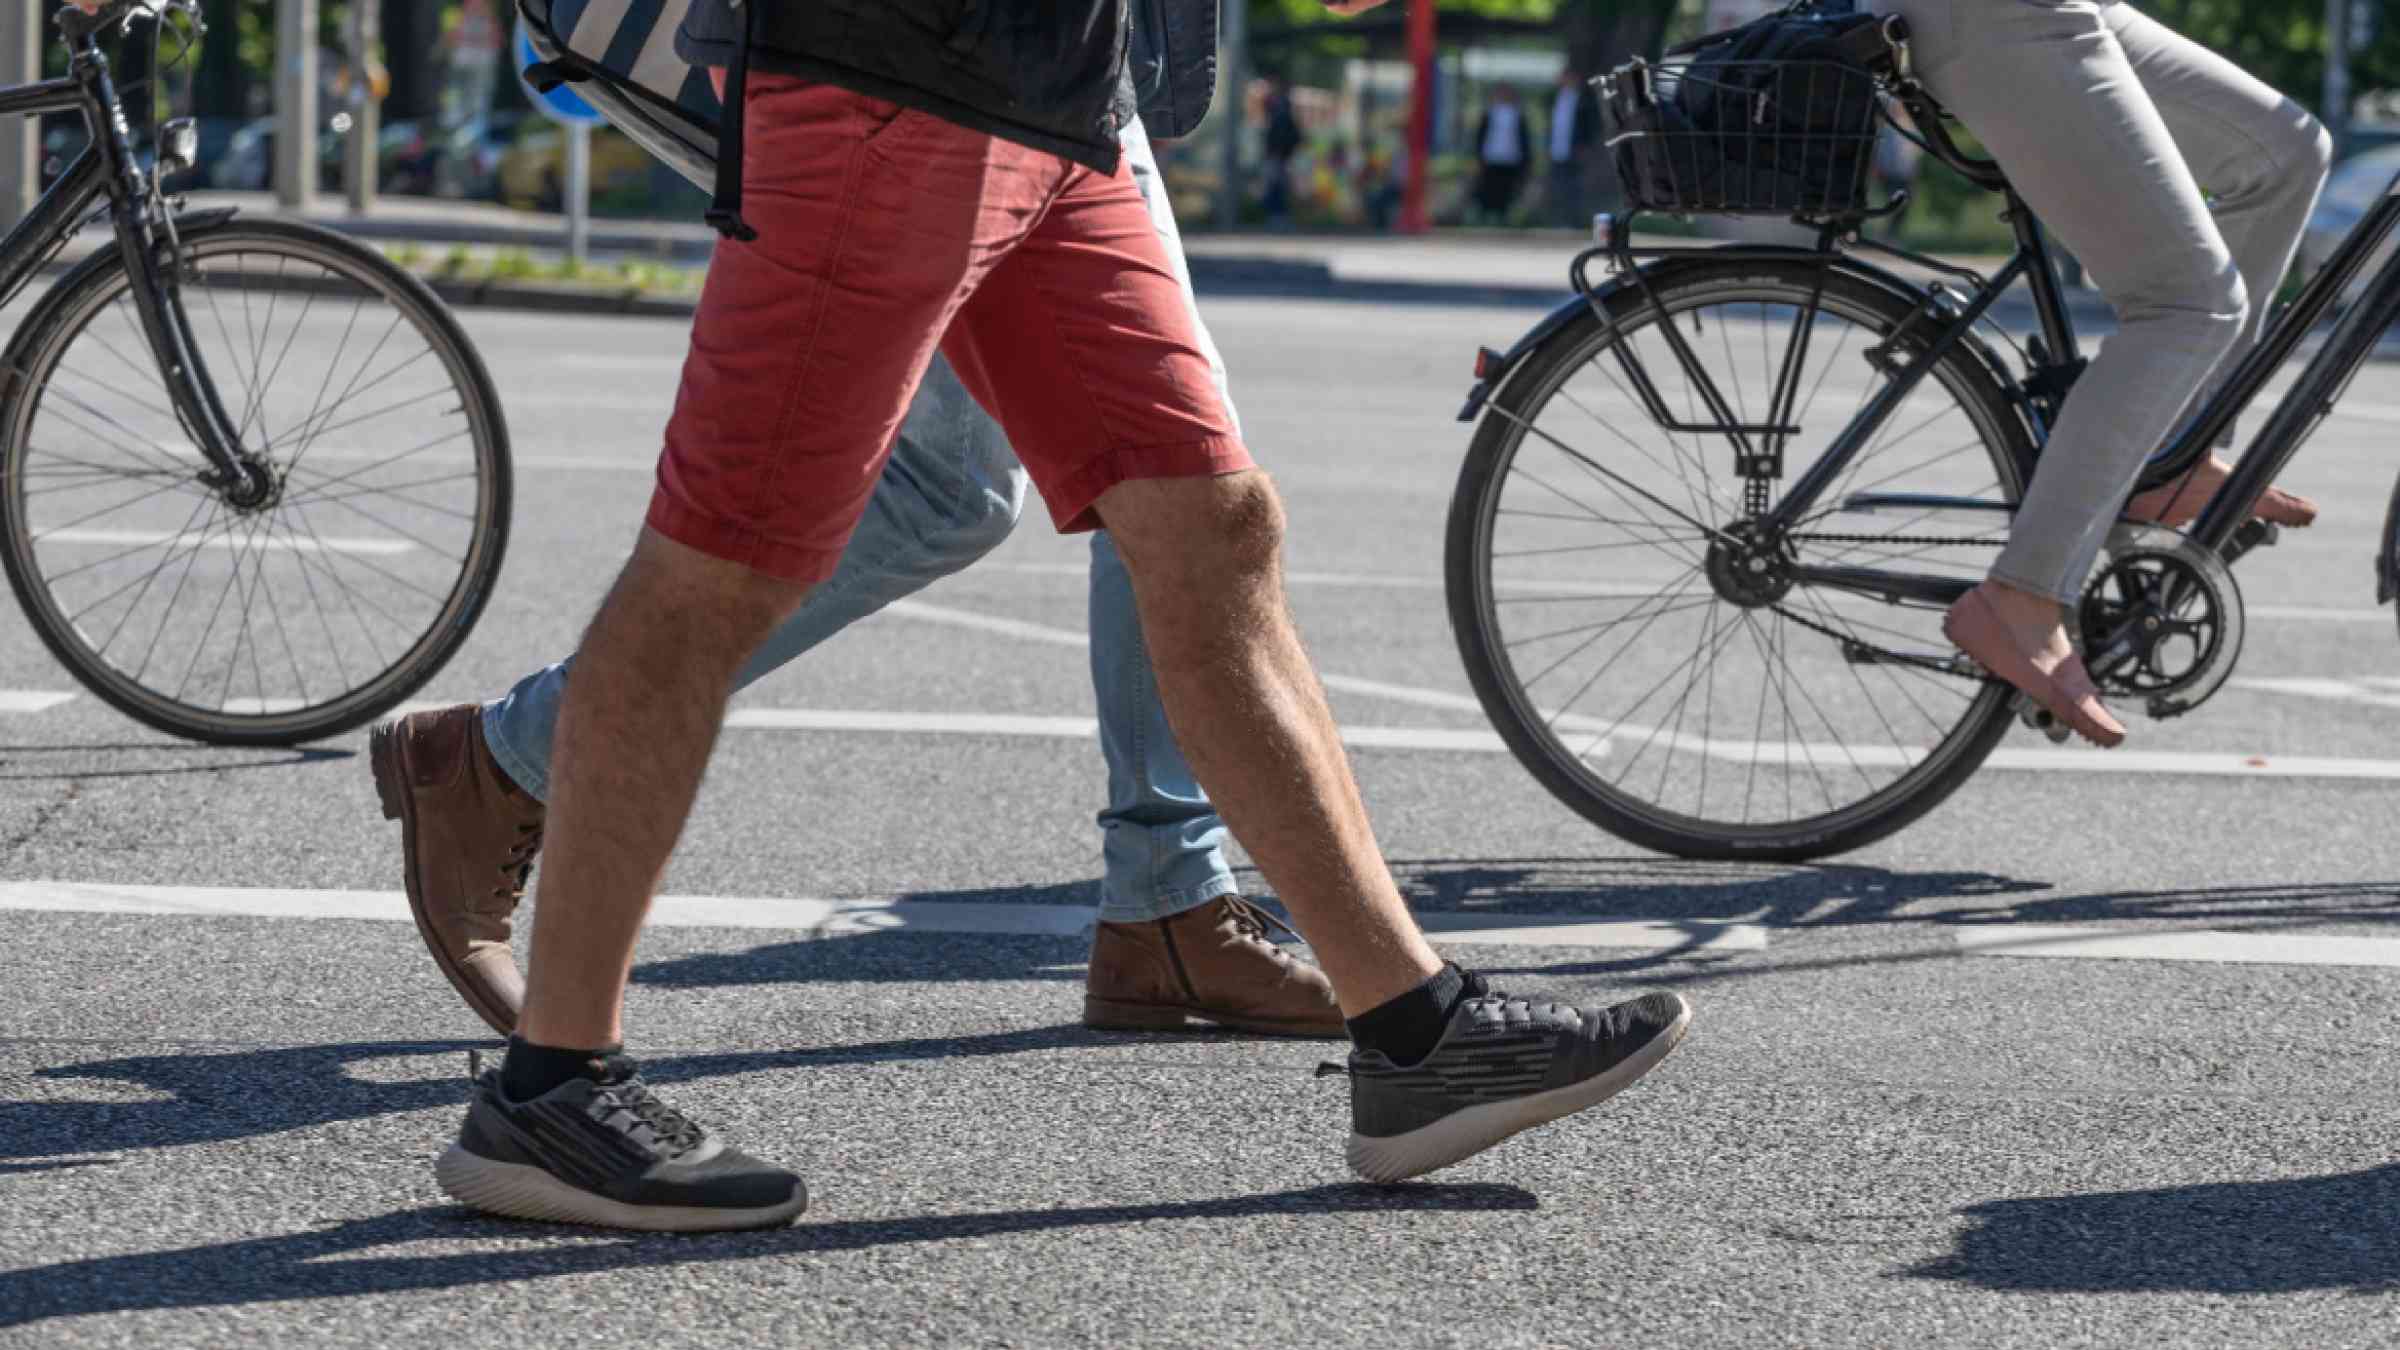 Pedestrians walk among bicyclists